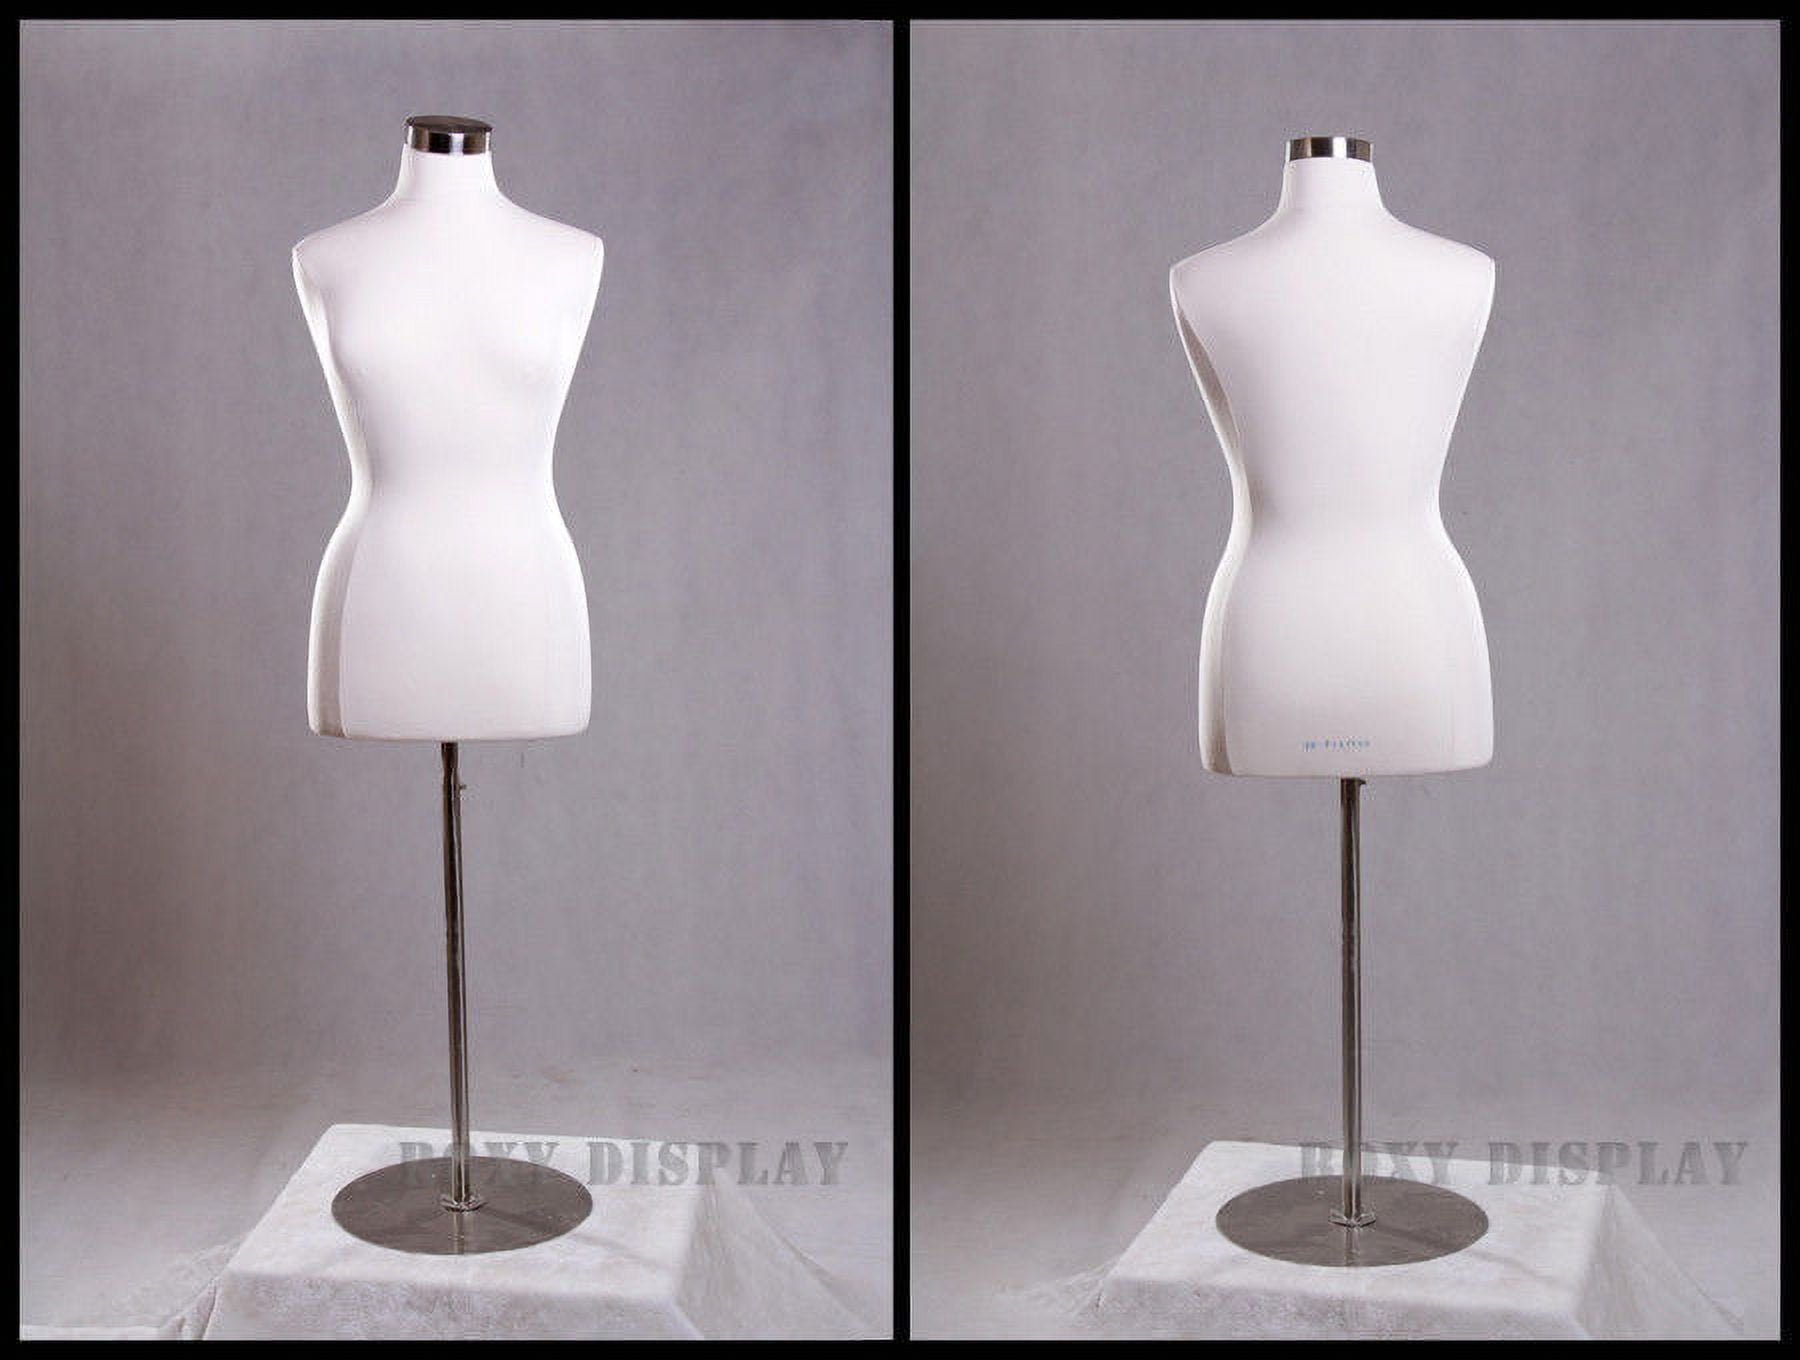 14-16 R M B20% OFF Adult Female Plus Size Off White Dress Form